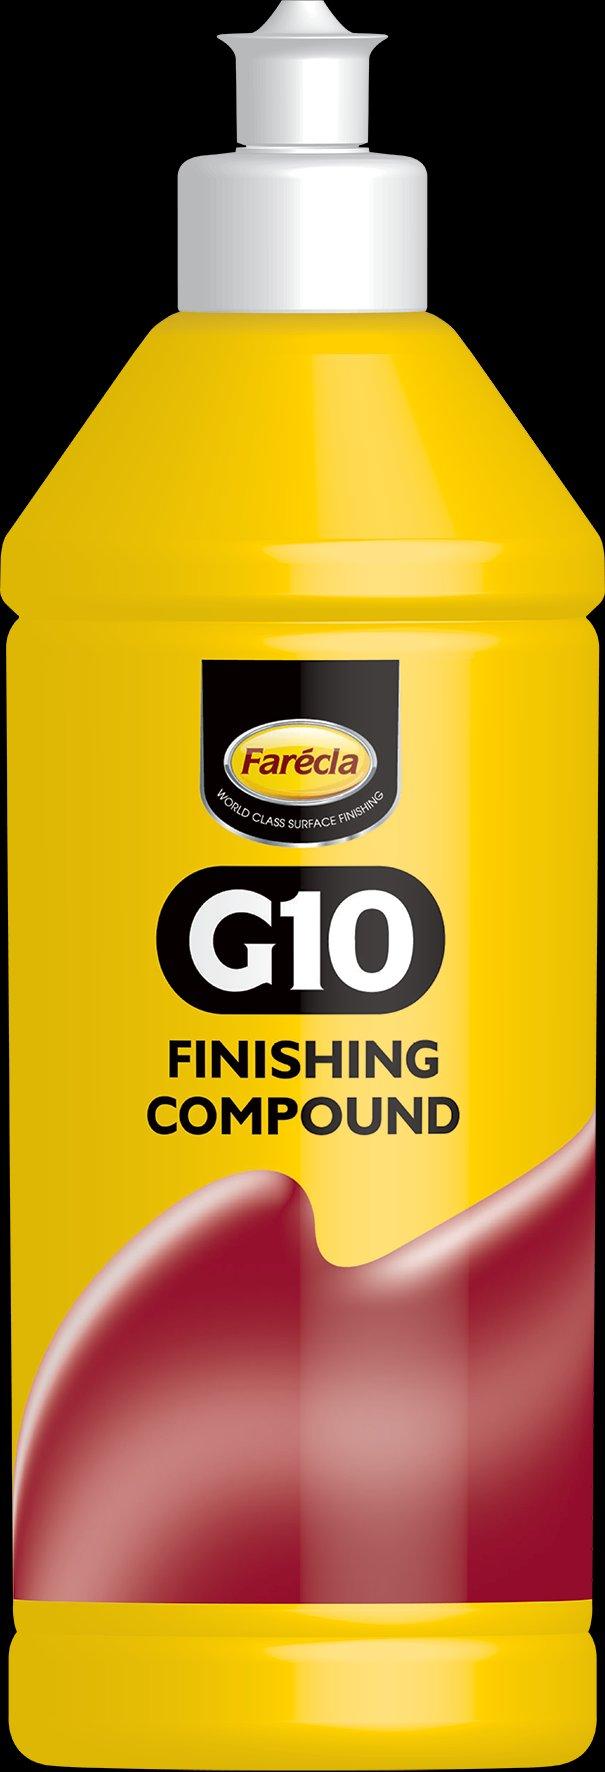 Farecla G10 Finishing Compound 500ml